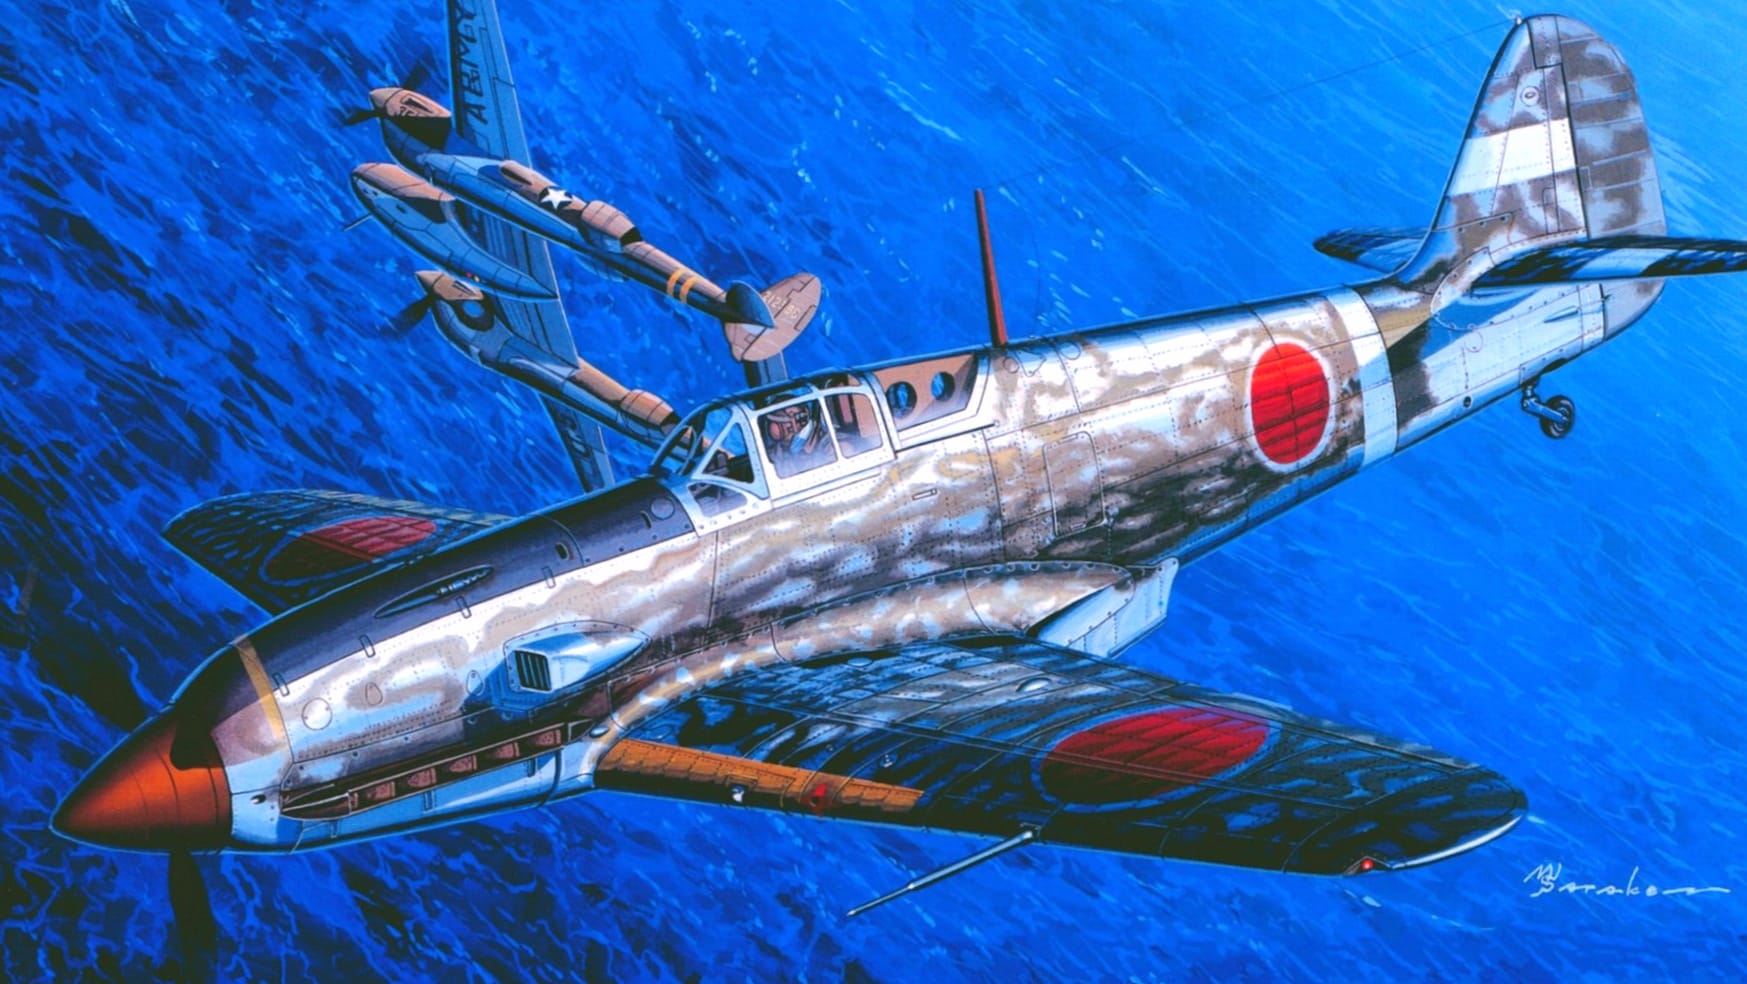 Kawasaki Ki-61 at 1280 x 960 size wallpapers HD quality